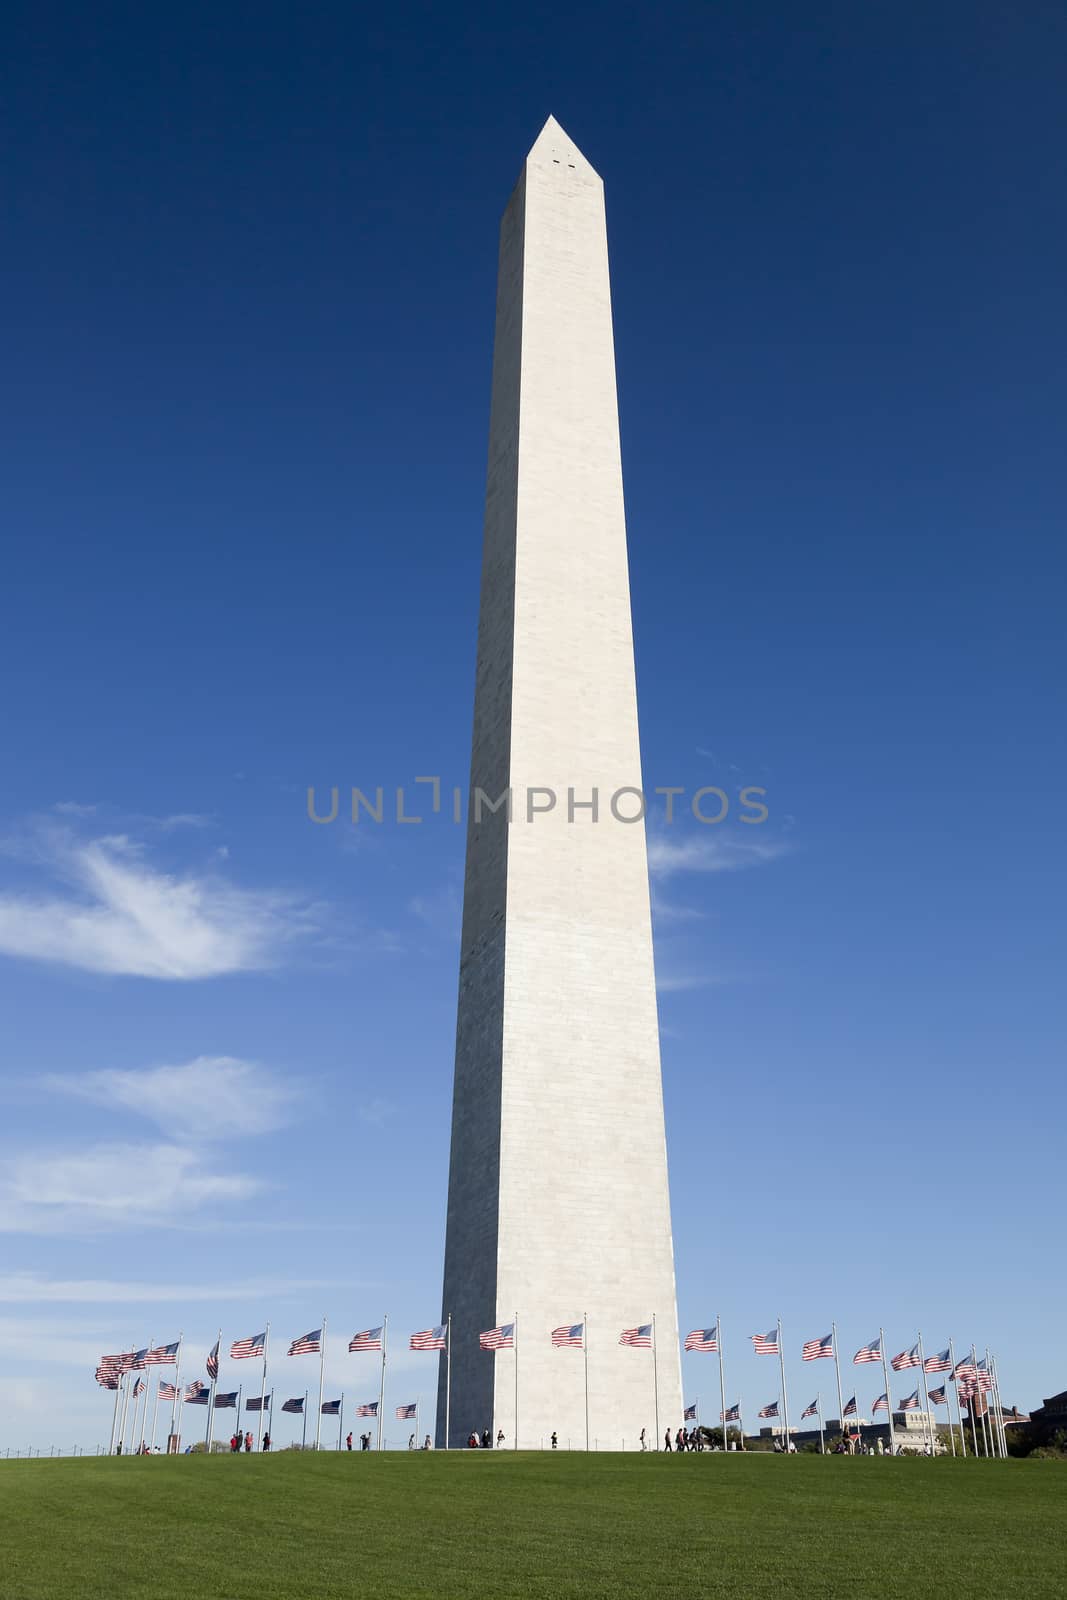 WASHINGTON, D.C. - OCTOBER 17, 2014: People enjoy sunny day at the Washington Monument. It is an obelisk built to commemorate George Washington.